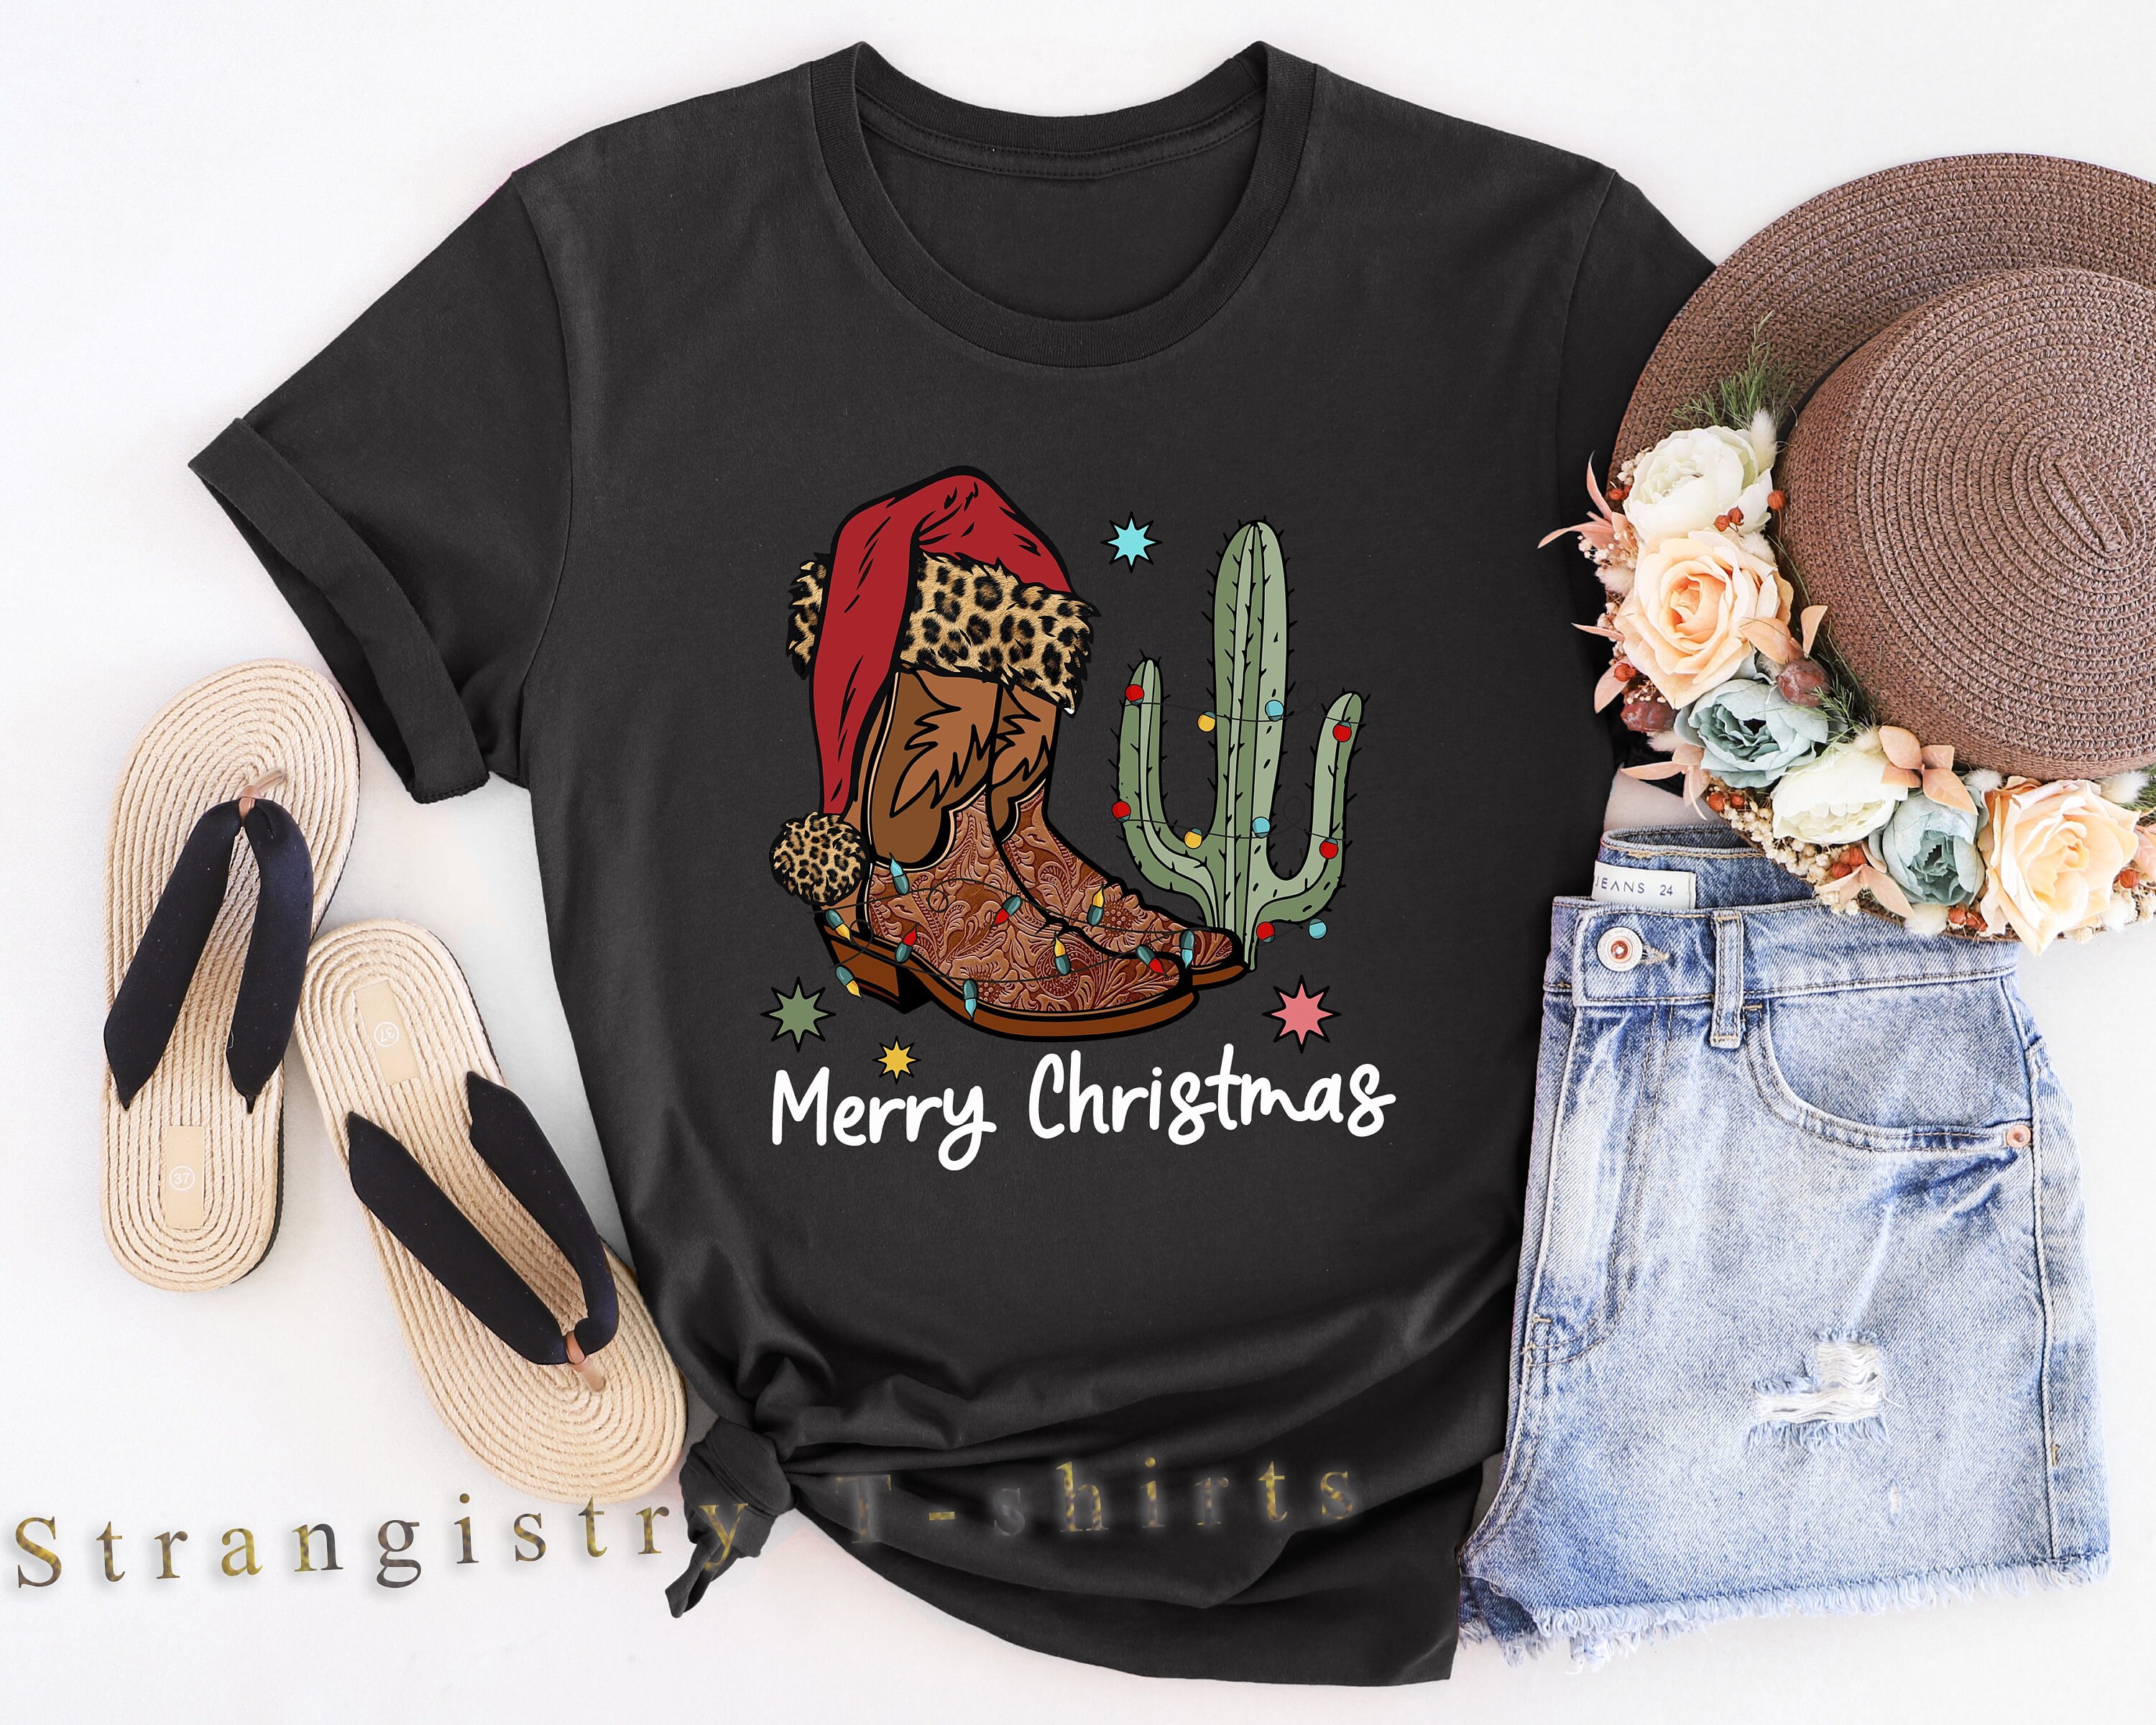 Retro Christmas Shirt, Christmas T-shirt, Merry Christmas T-shirt, Cowboy Christmas Shirt, Christmas Gift, Unisex Christmas Shirt